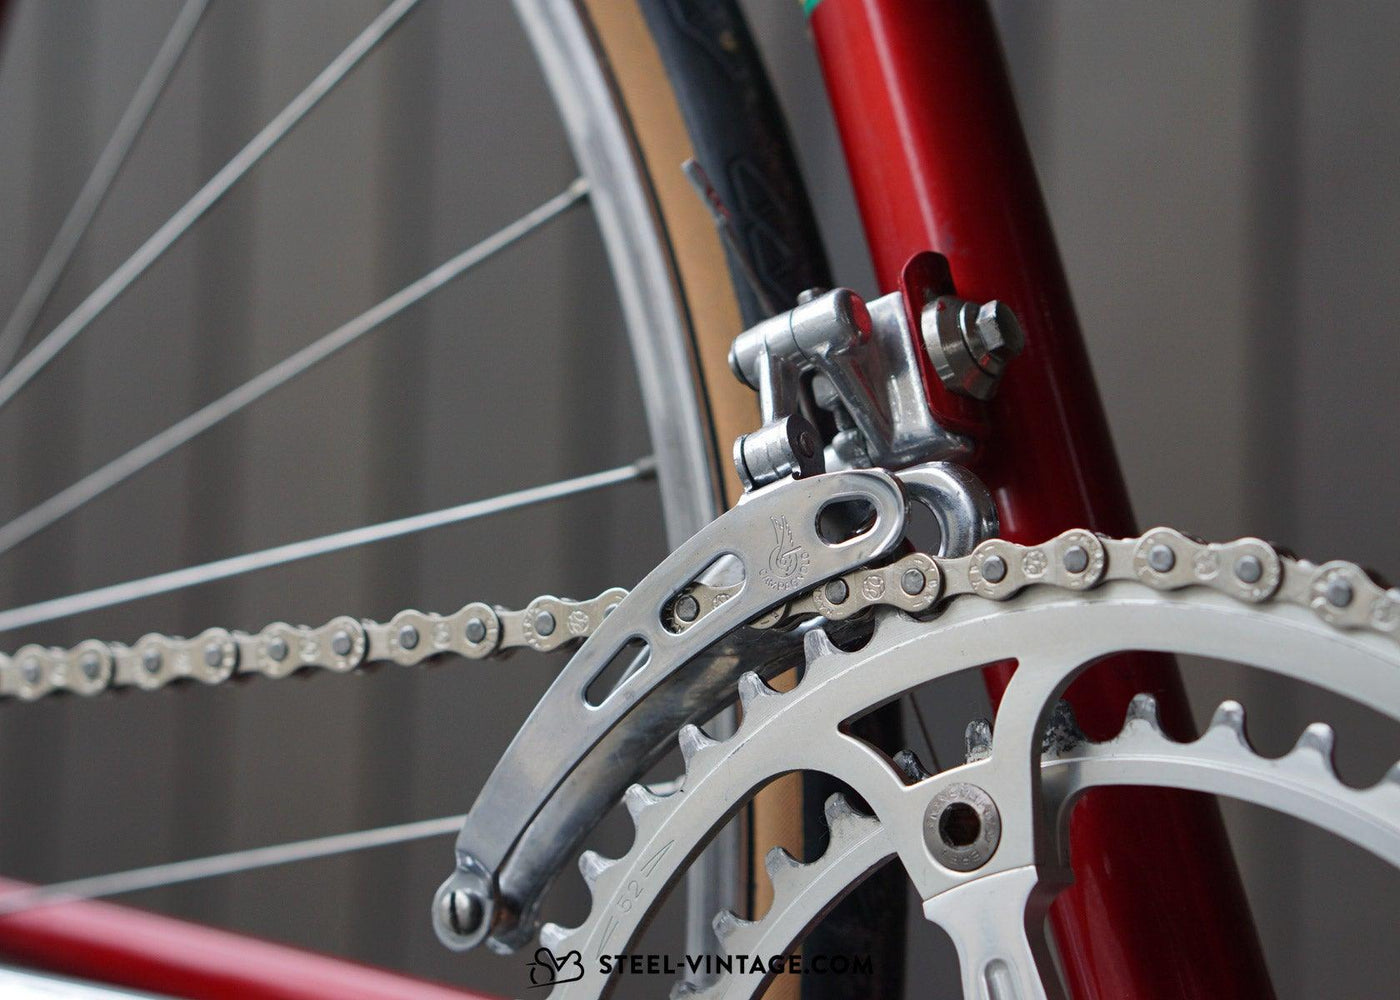 Colnago Nuovo Mexico Vintage Bicycle Saronni Red 1980s - Steel Vintage Bikes